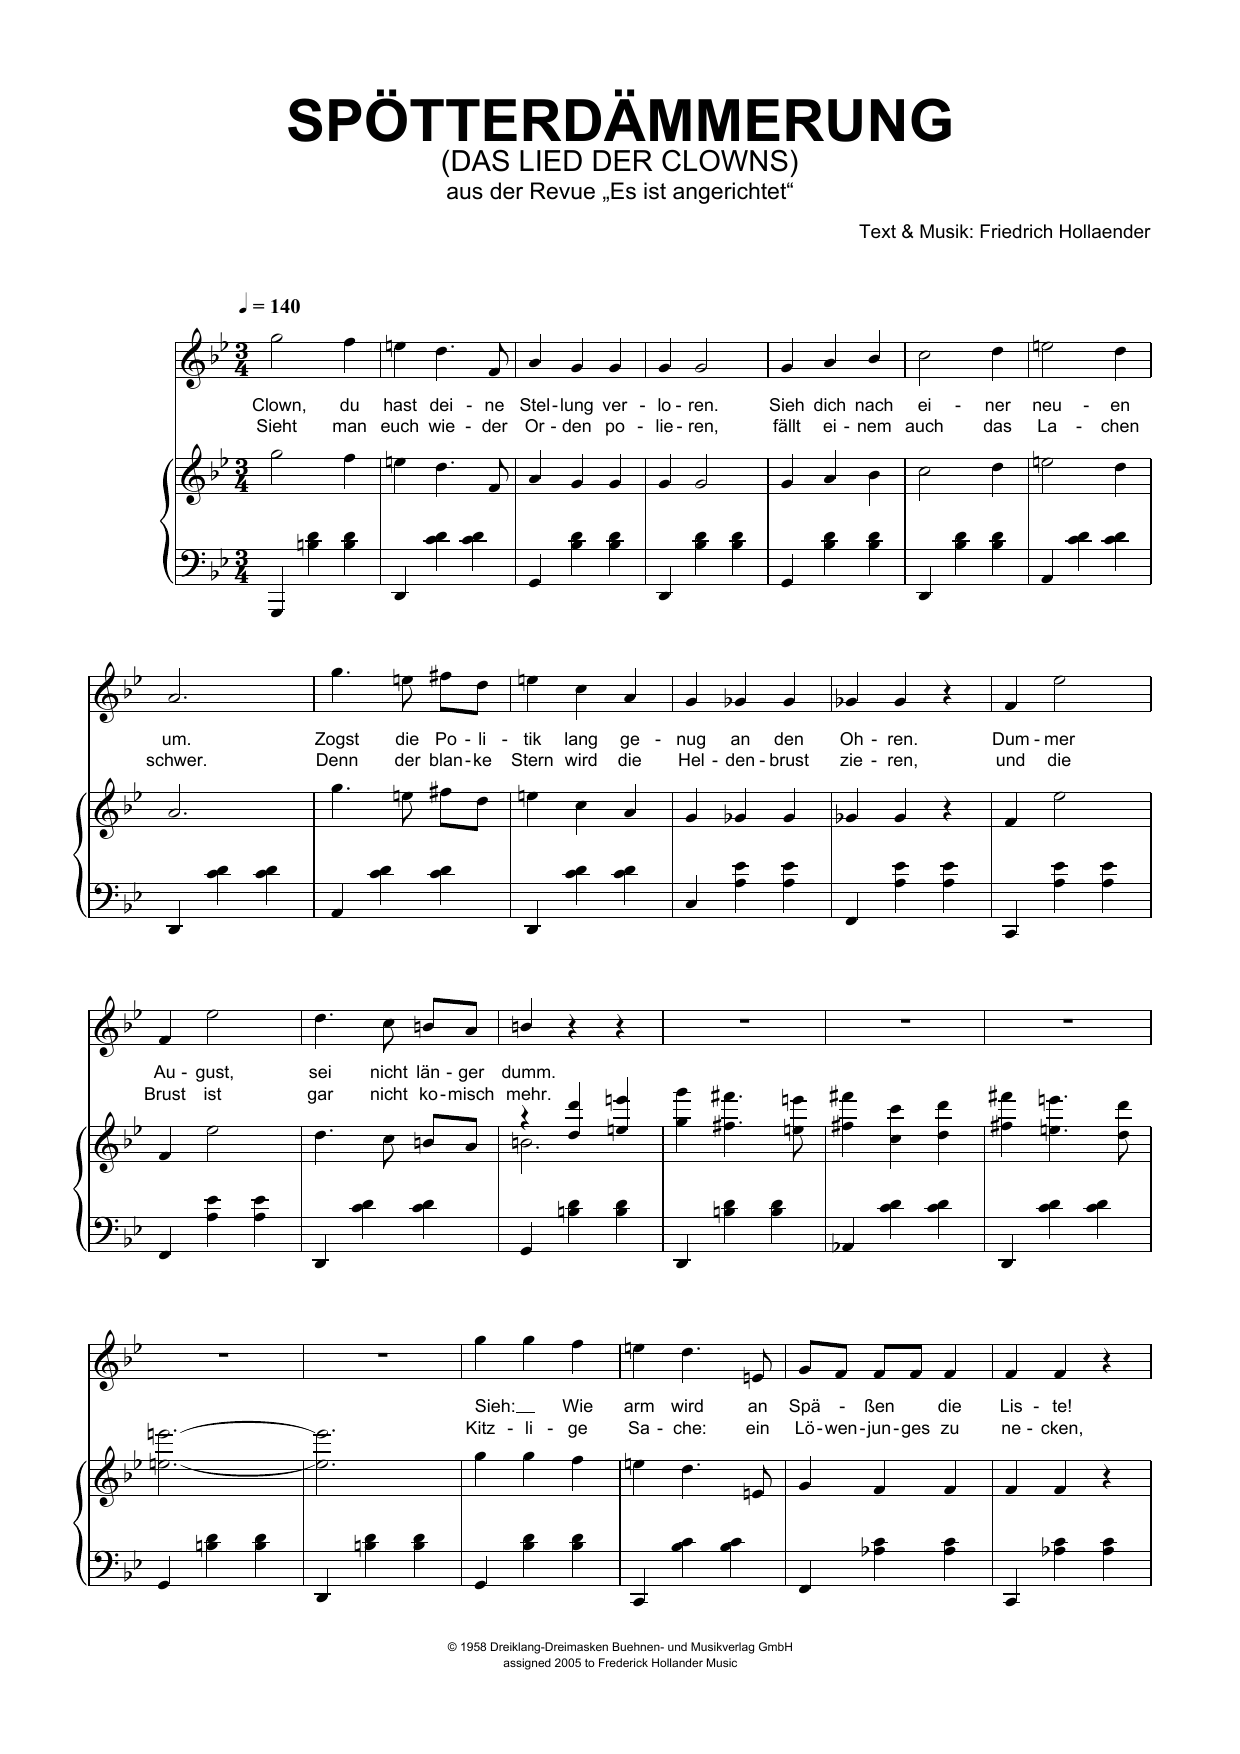 Friedrich Hollaender Spotterdammerung (Das Lied Der Clowns) Sheet Music Notes & Chords for Piano & Vocal - Download or Print PDF